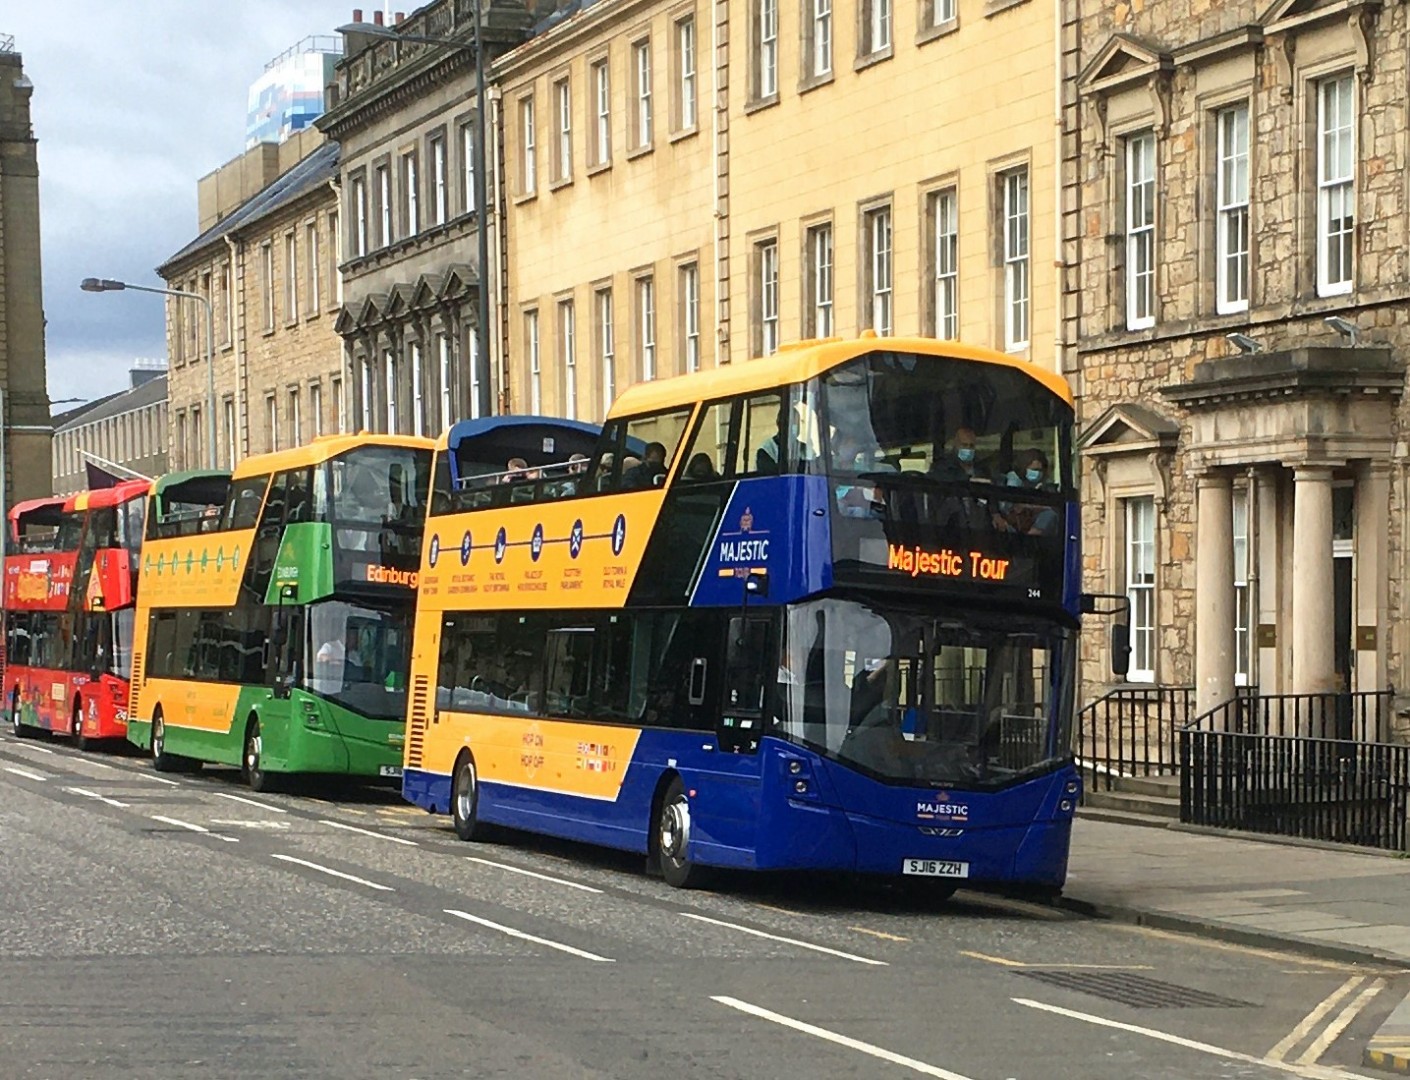 bus tours of scotland from edinburgh